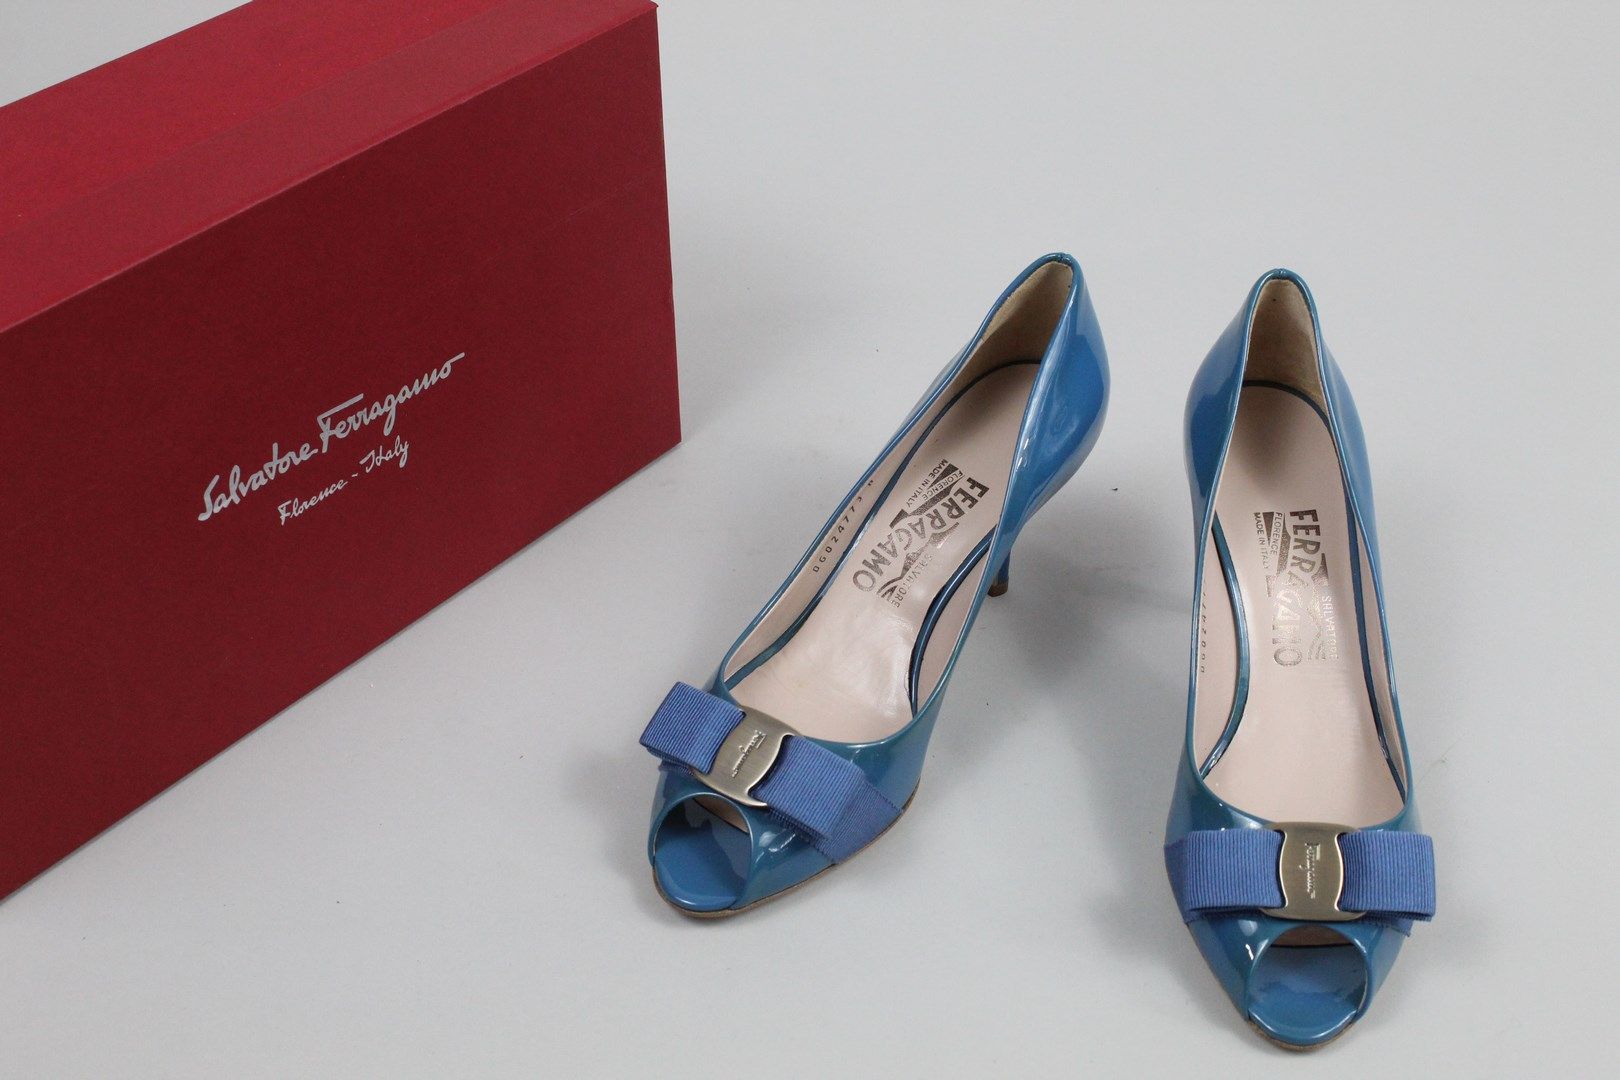 Null 萨尔瓦托雷-费拉格慕



一双蓝色釉面皮革高跟鞋，鞋头开放，中间有一个织物蝴蝶结，上面有象征该品牌的签名牌。



尺寸：37

鞋跟高度：7厘米
&hellip;